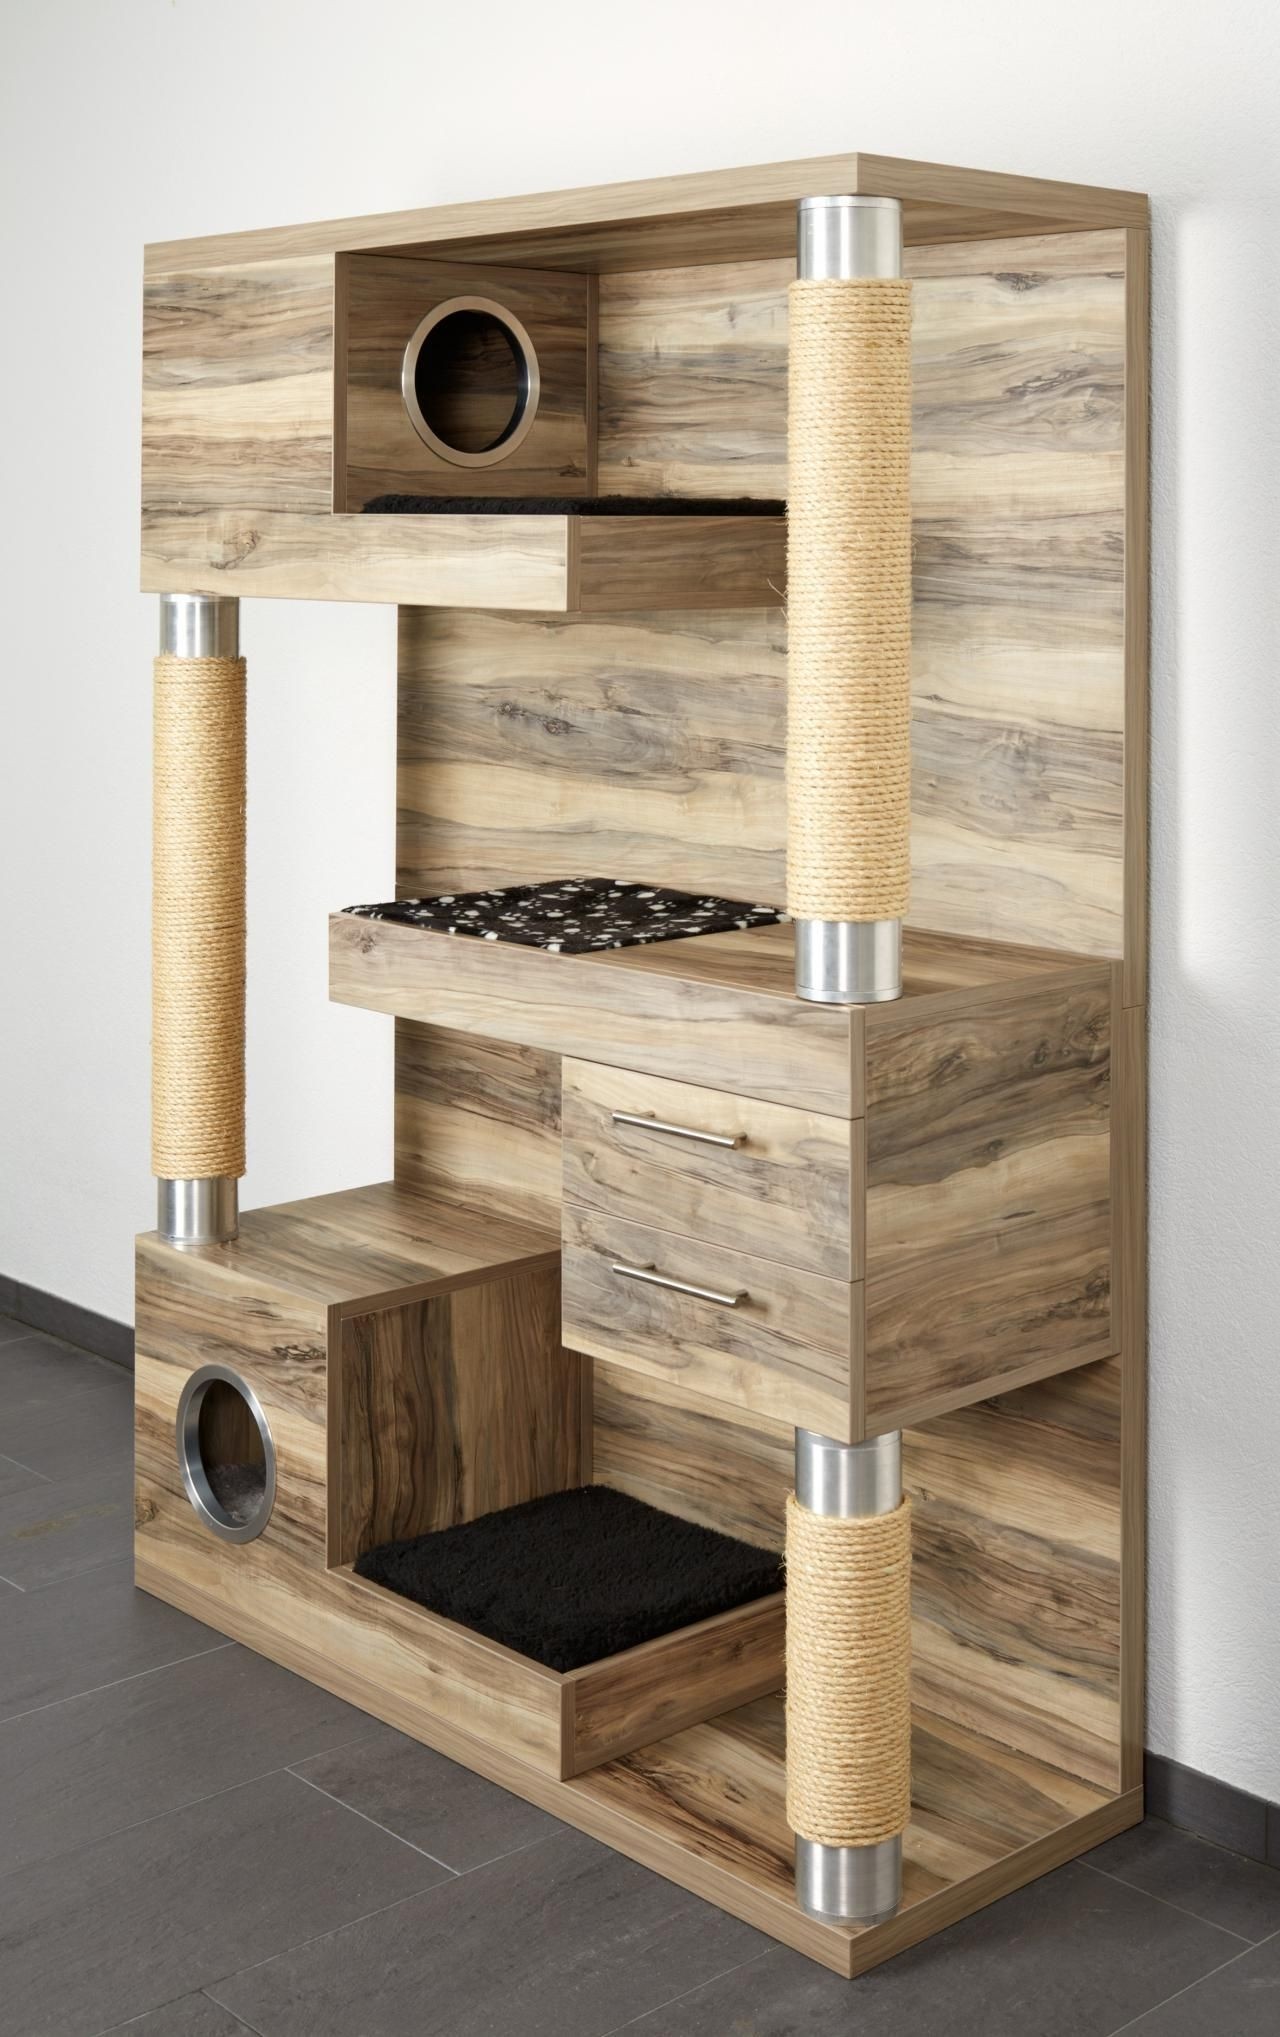 Solid wood cat furniture